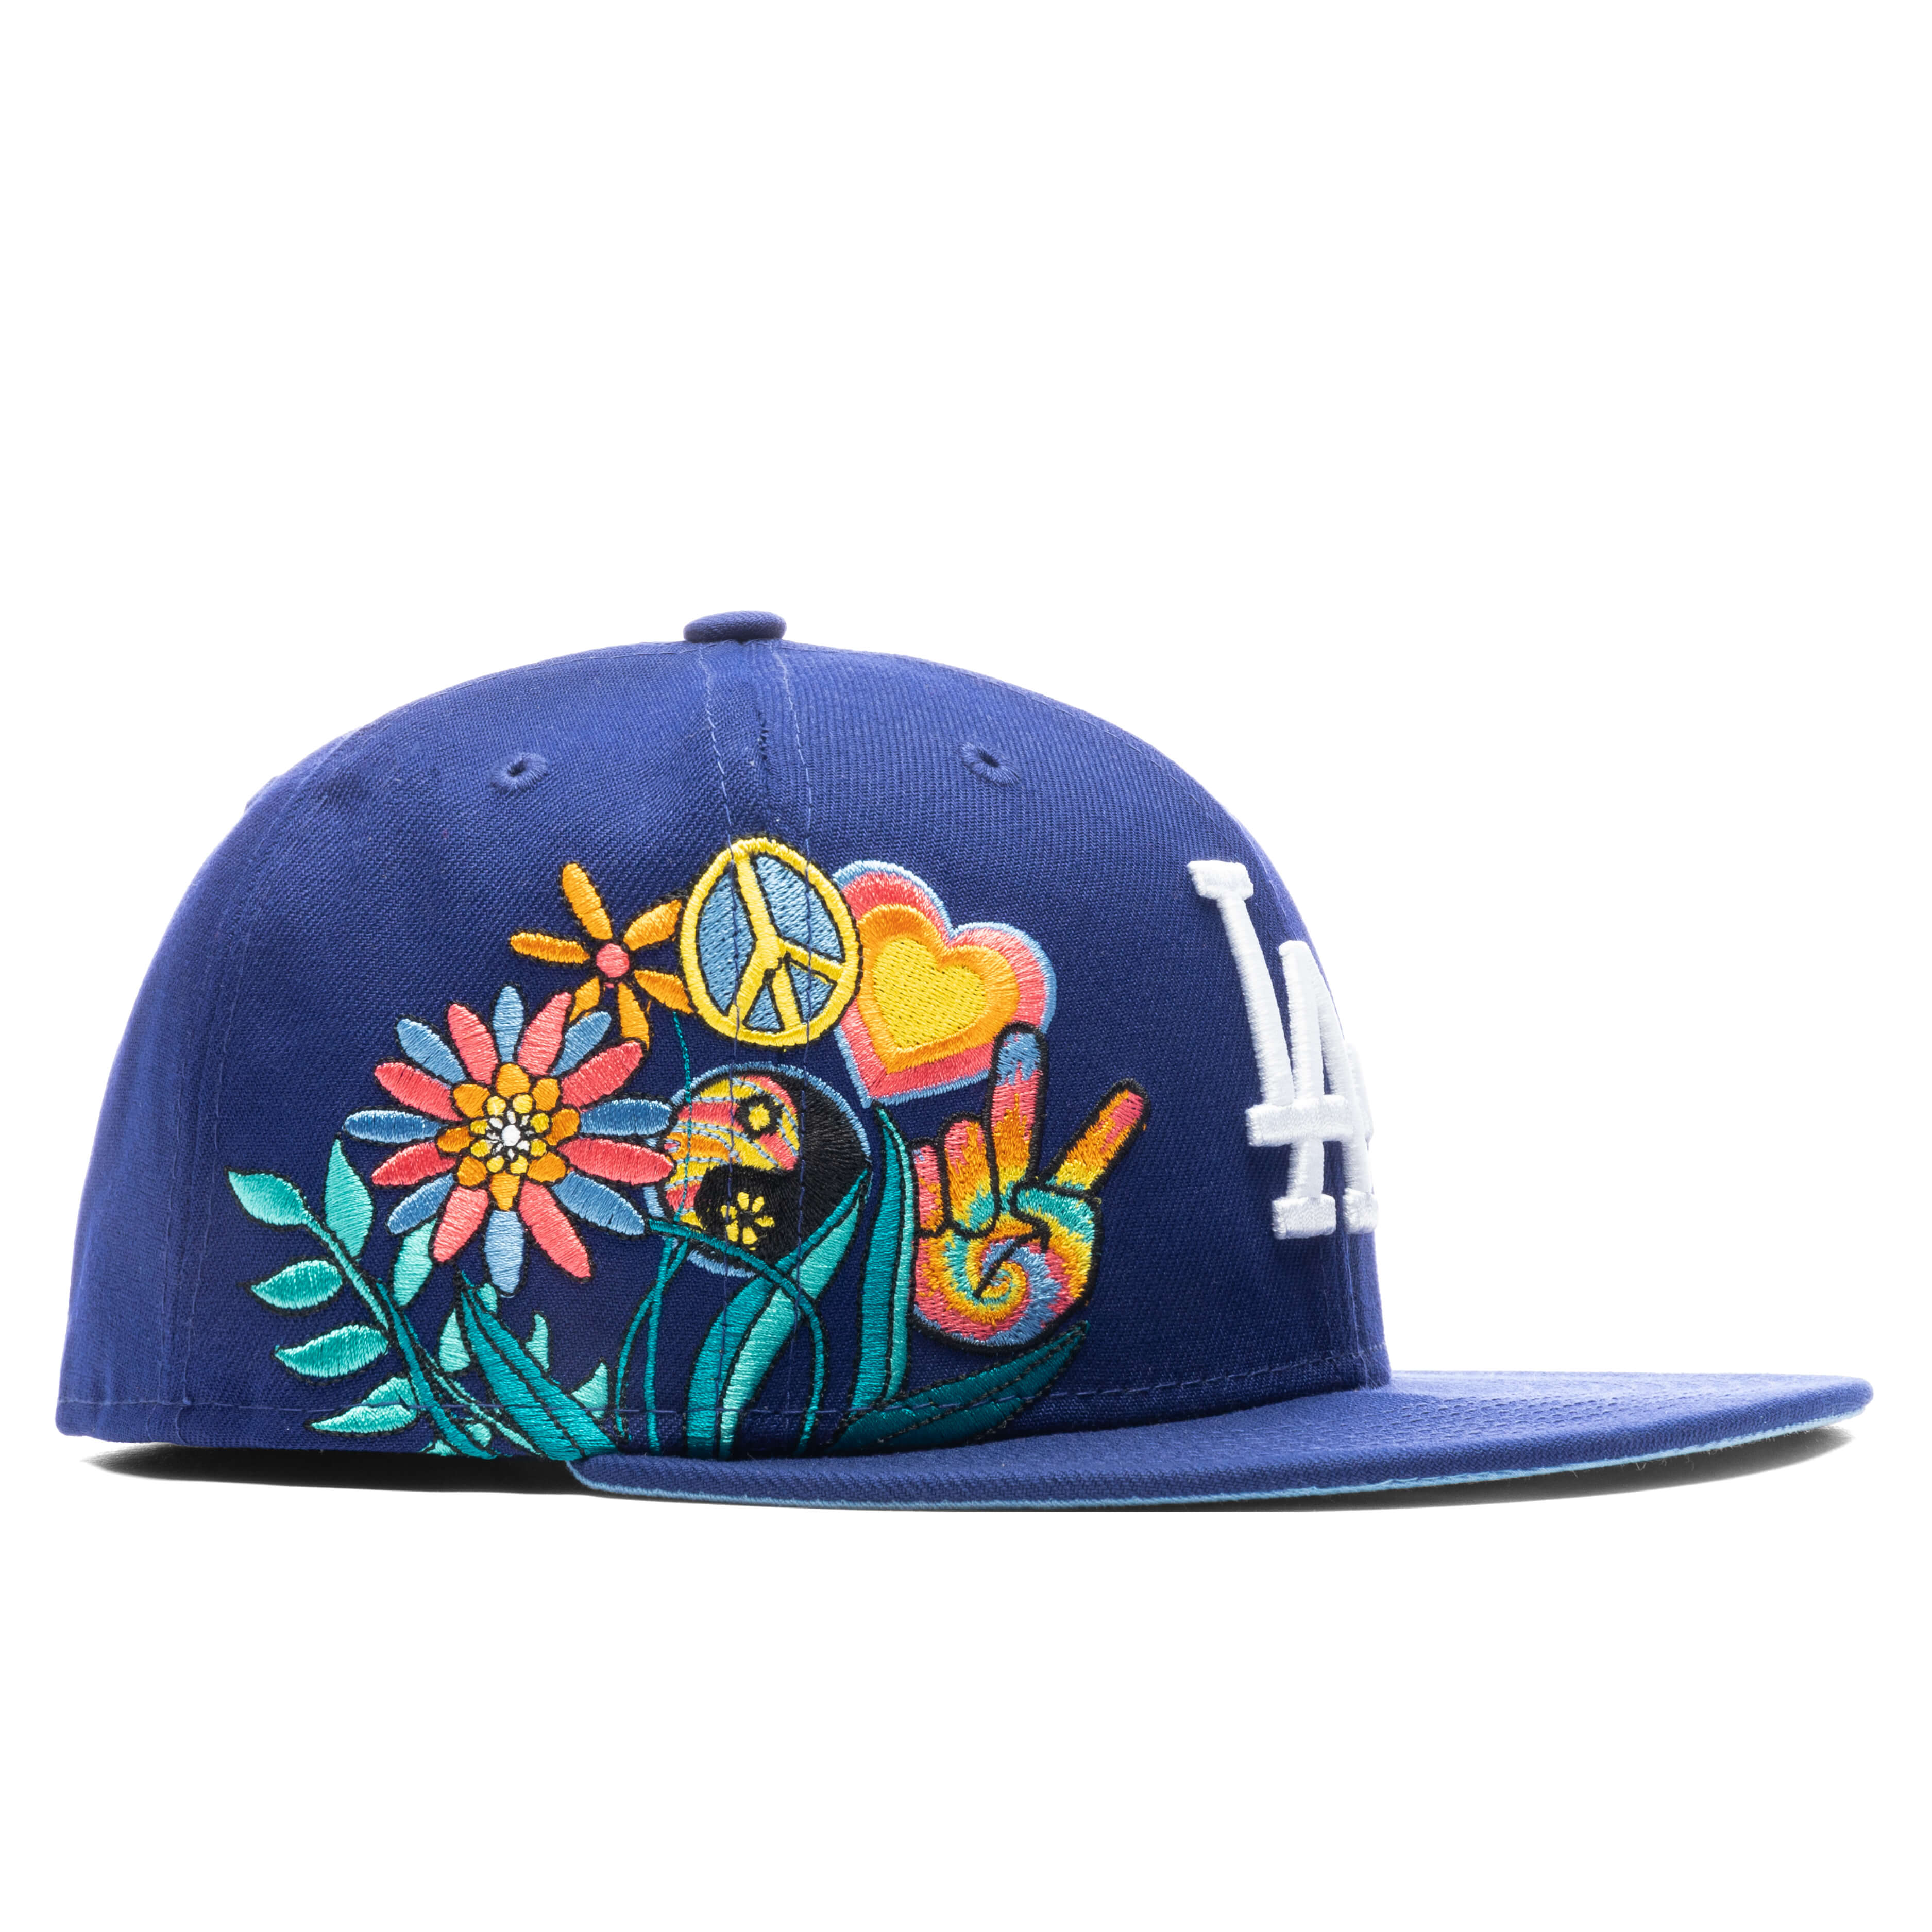 New Los Angeles Dodgers Salvadoran Heritage Night Shirt 9/4/22 